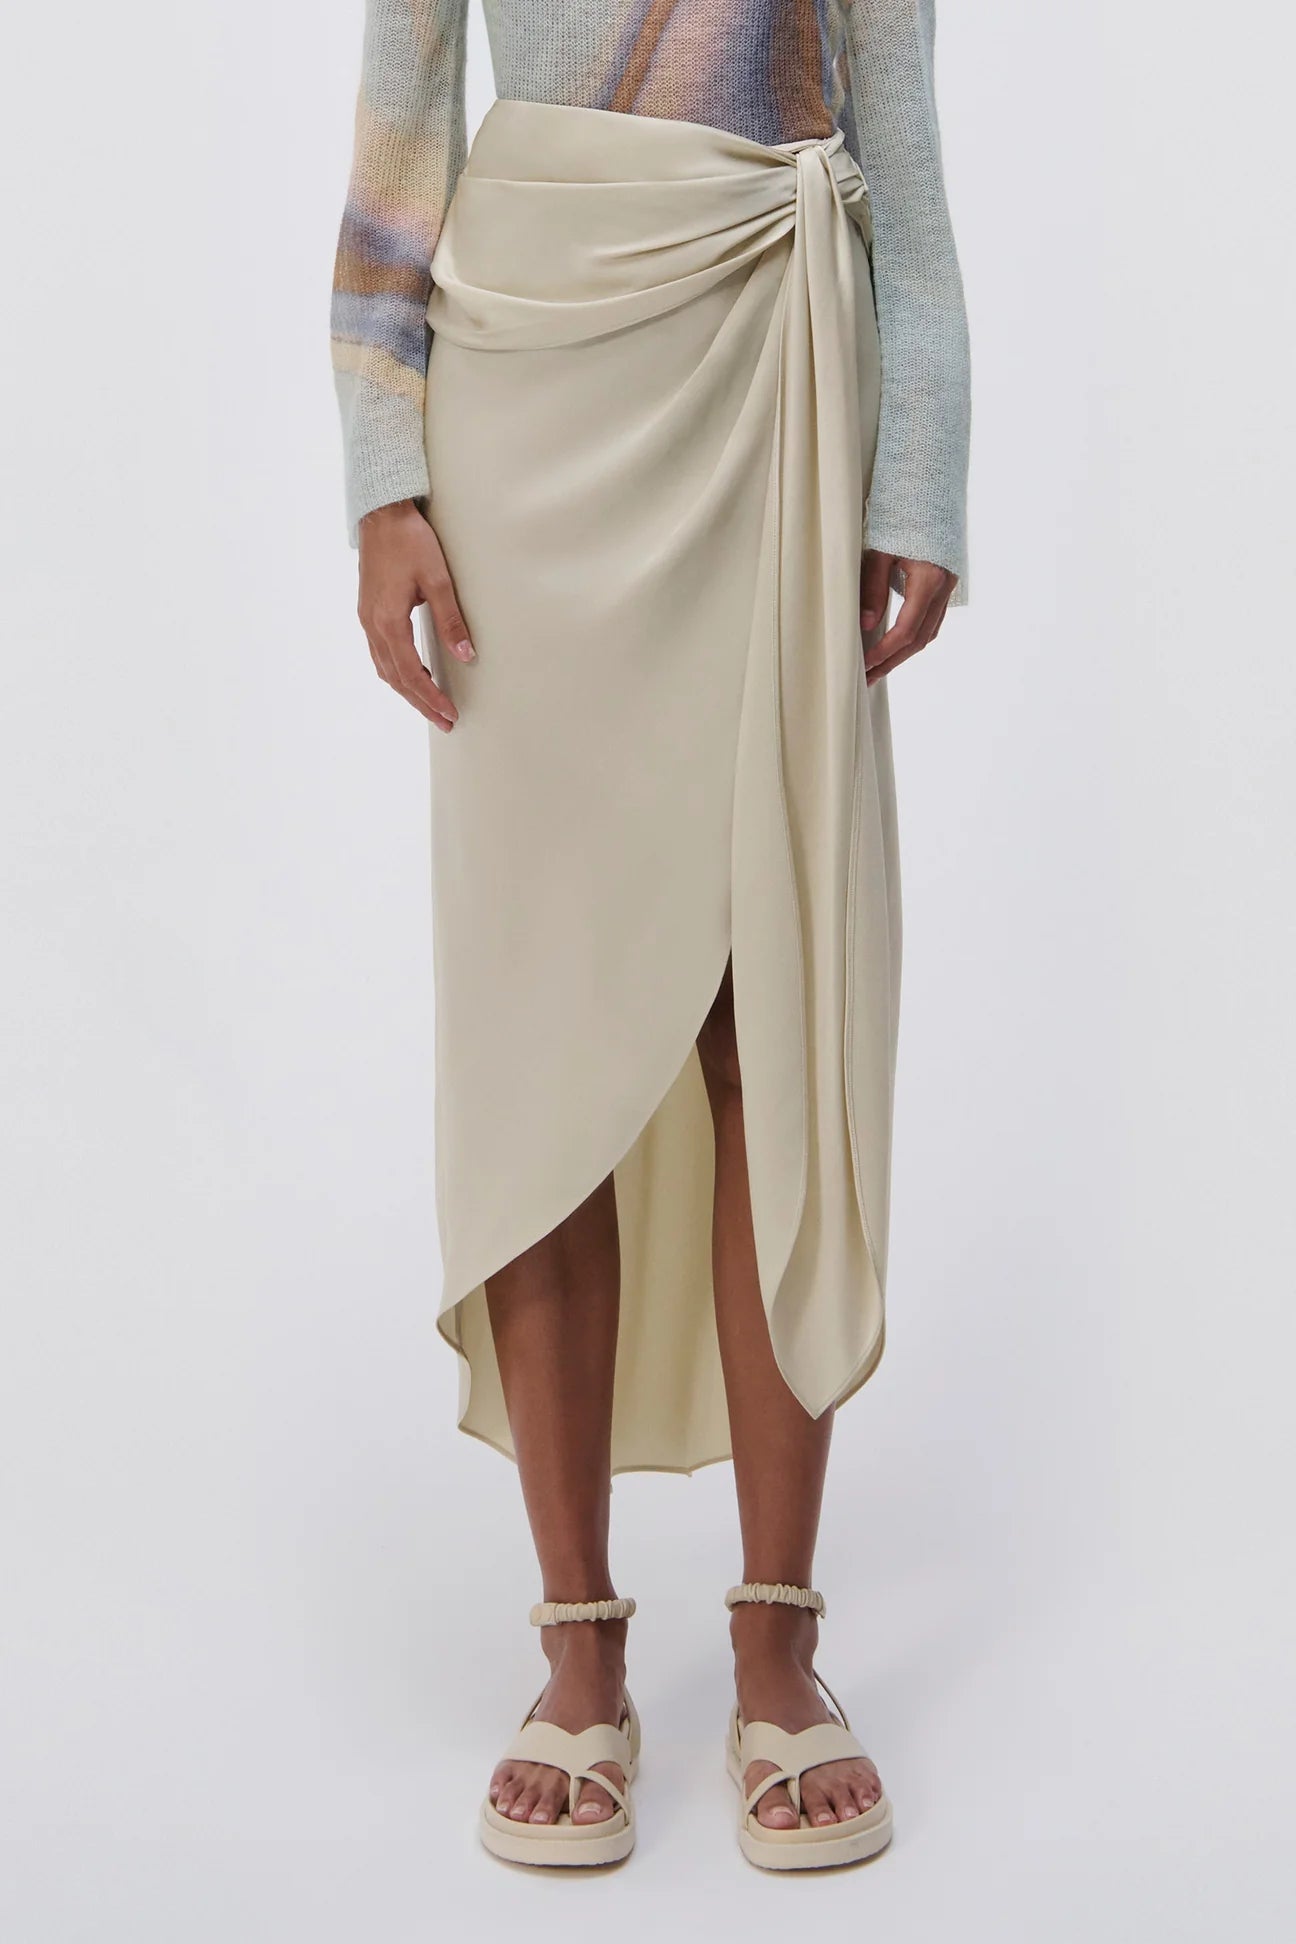 Elisabetta Midi Skirt in Bluebell by Jonathan Simkhai